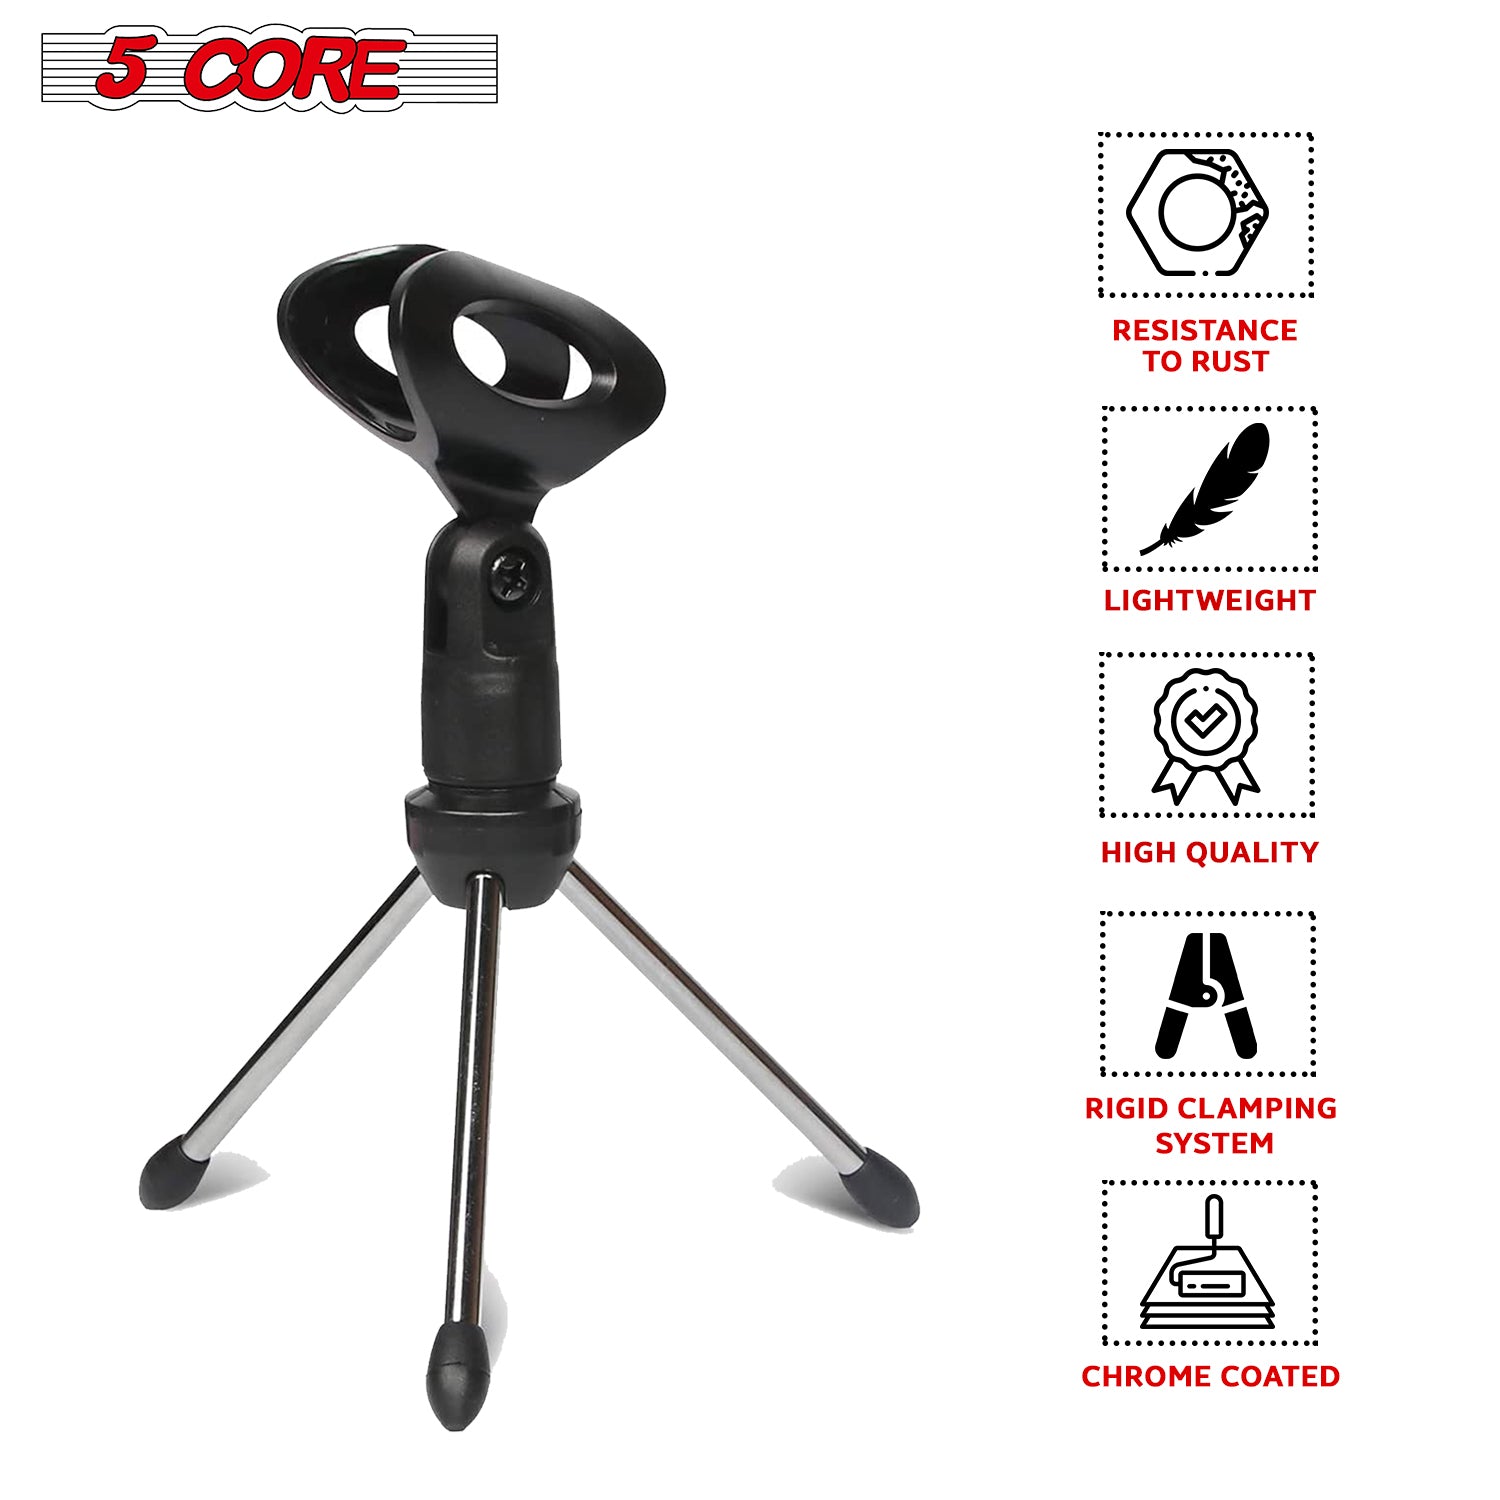 5 Core Desk Mic Stand Adjustable Table Tripod Portable Desktop Microphone Stands Holder